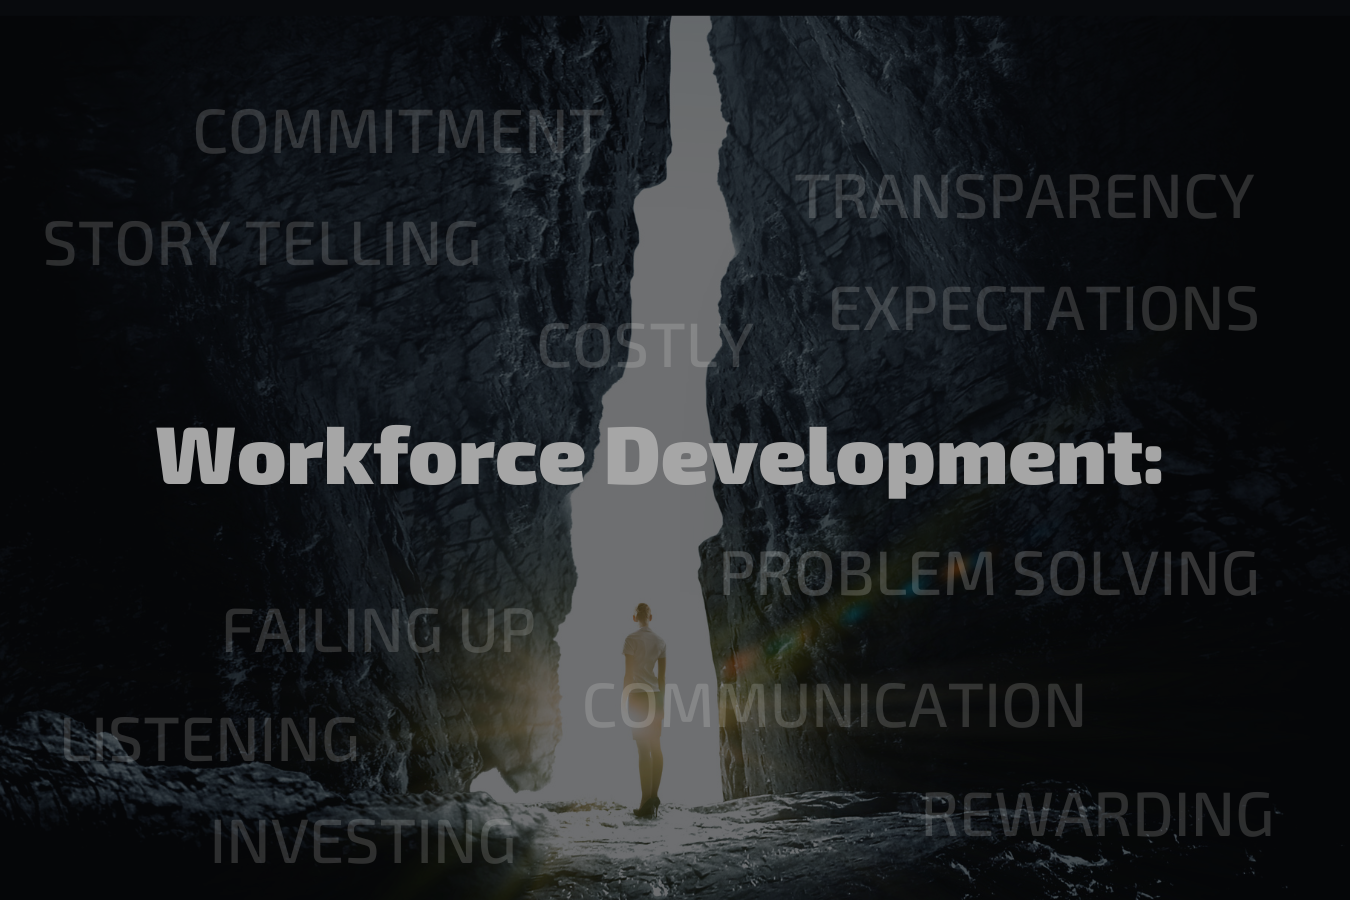 Workforce Development is a commitment